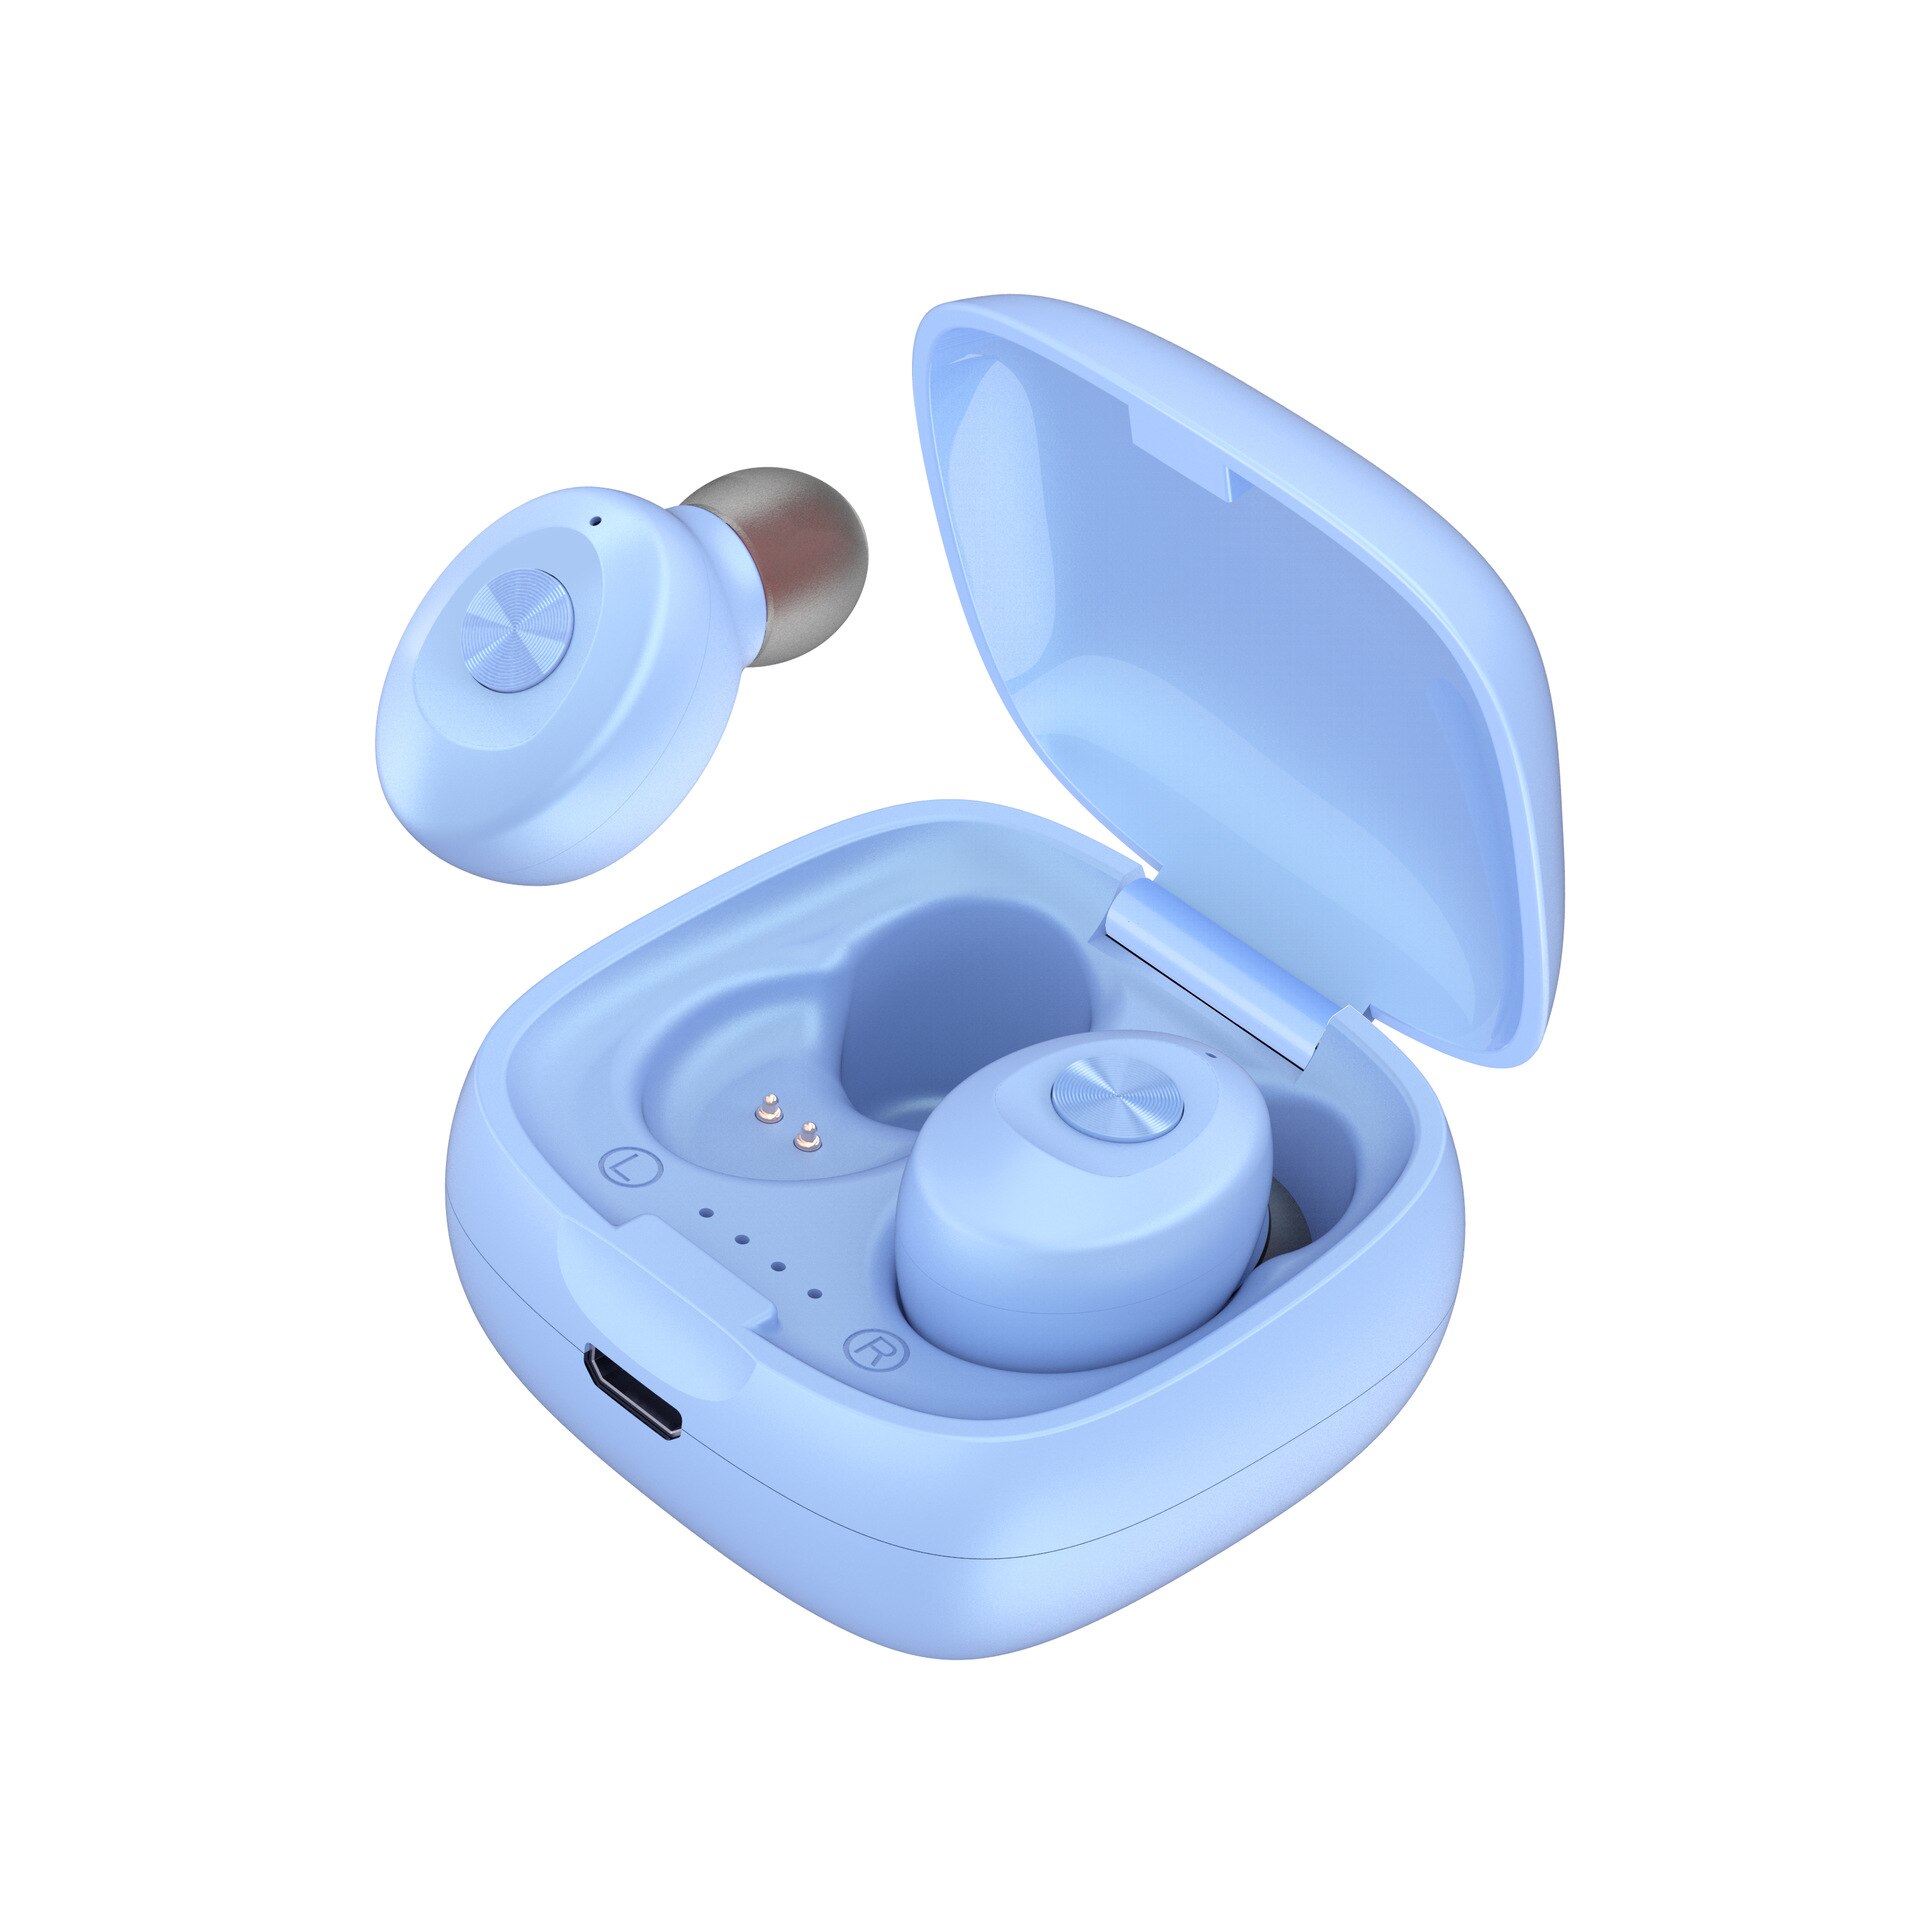 XG12 TWS Bluetooth 5.0 Earphone Stereo Wireless Earbus HIFI Sound Sport Earphones Handsfree Gaming Headset with Mic for Phone: XG12 blue